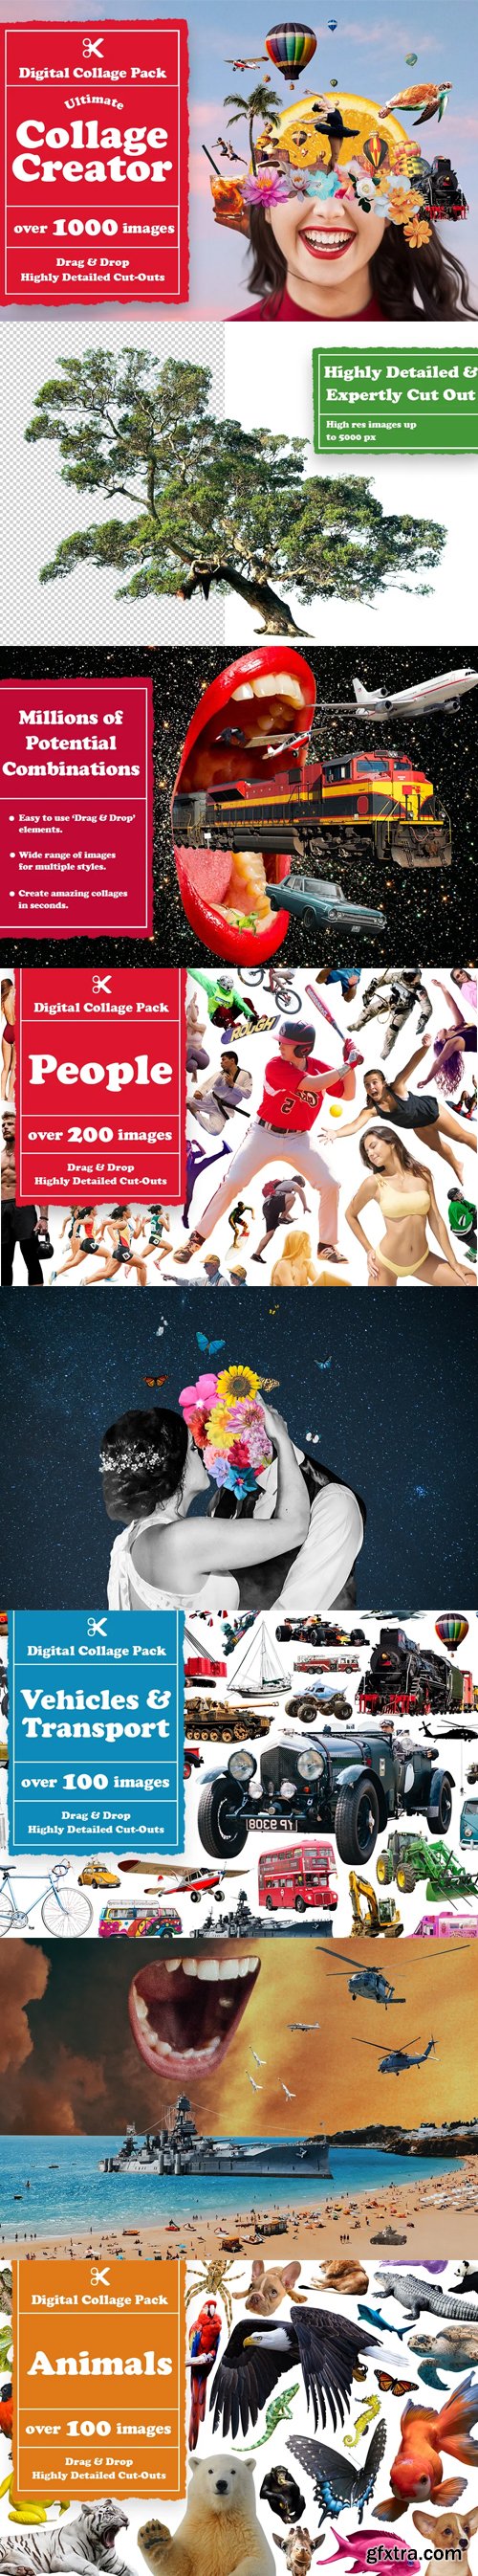 CreativeMarket - Ultimate Collage Creator 1000+ - 6174097